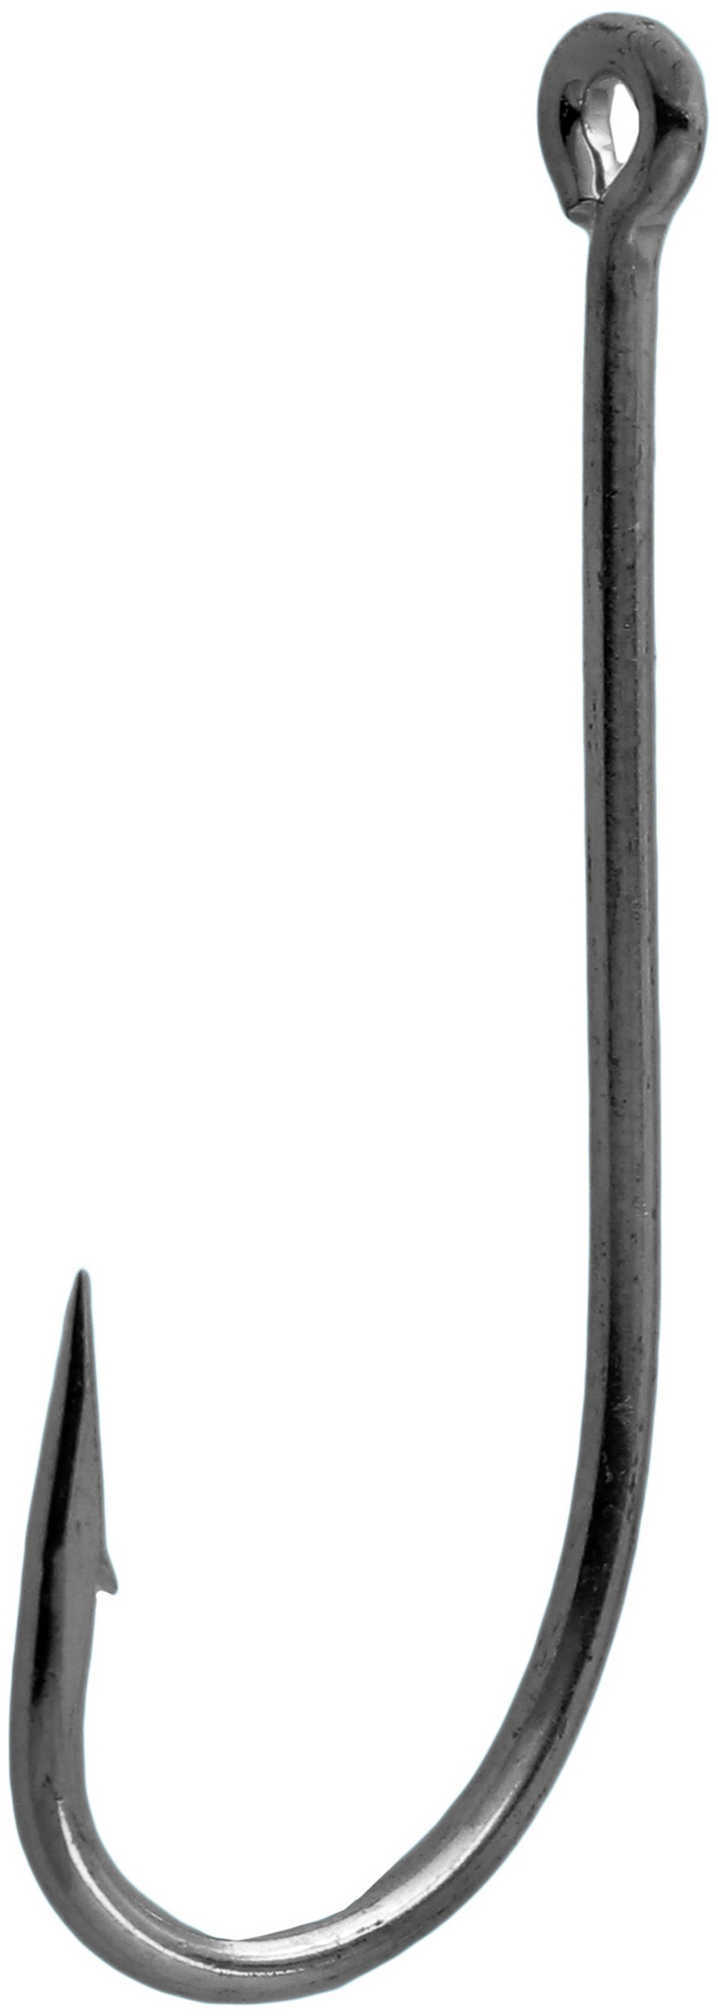 Gamakatsu SS15 Standard Saltwater Tin Plated Hook Size 1/0 Md: 22511-10